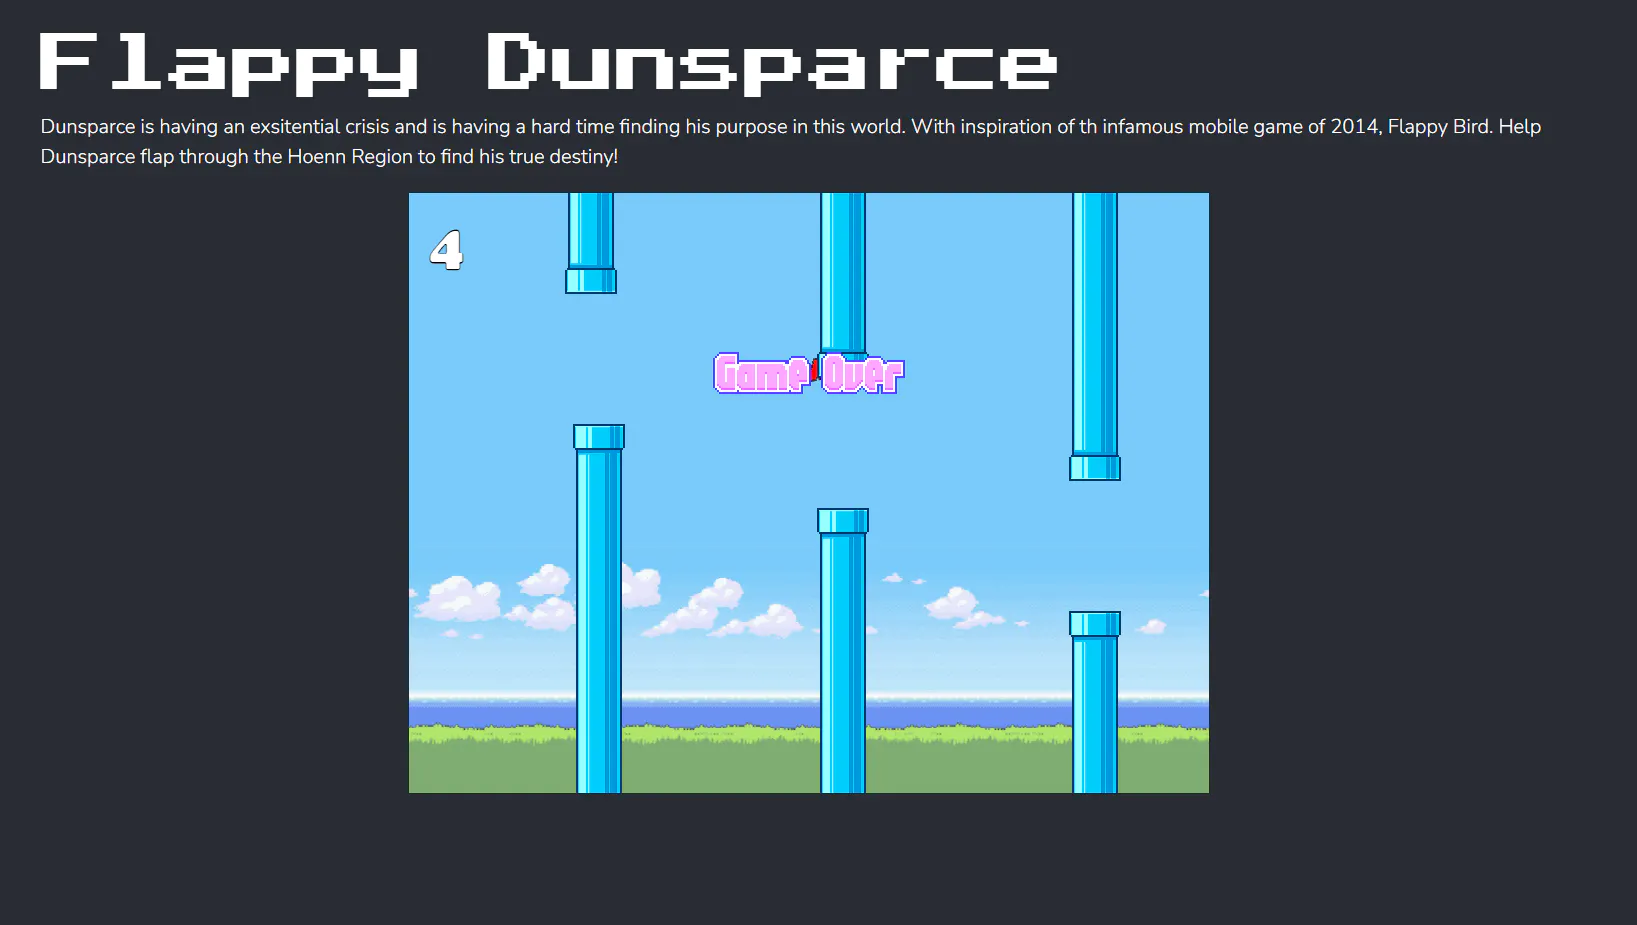 Flappy Dunsparce